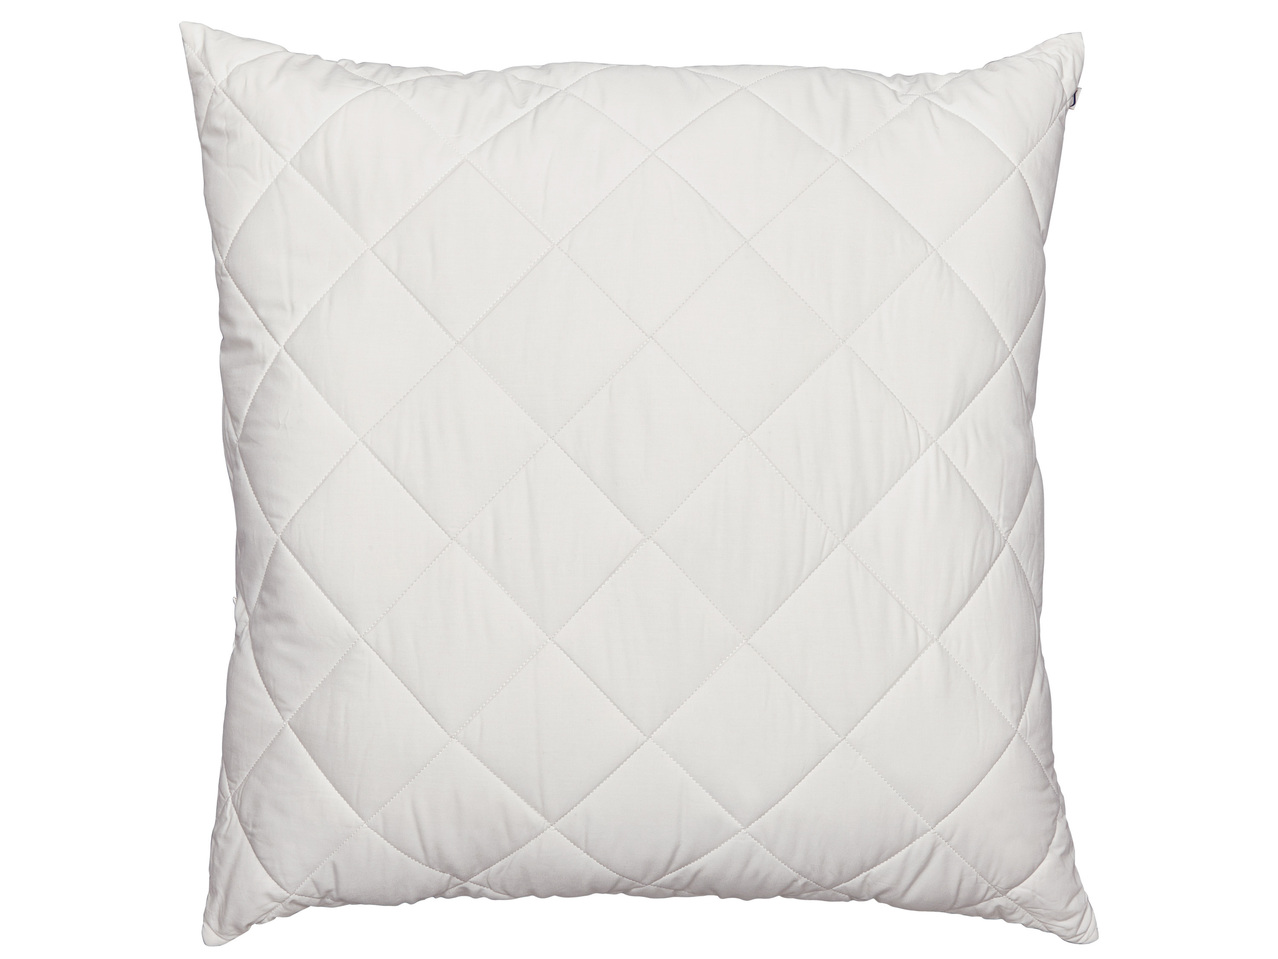 MERADISO Pillow